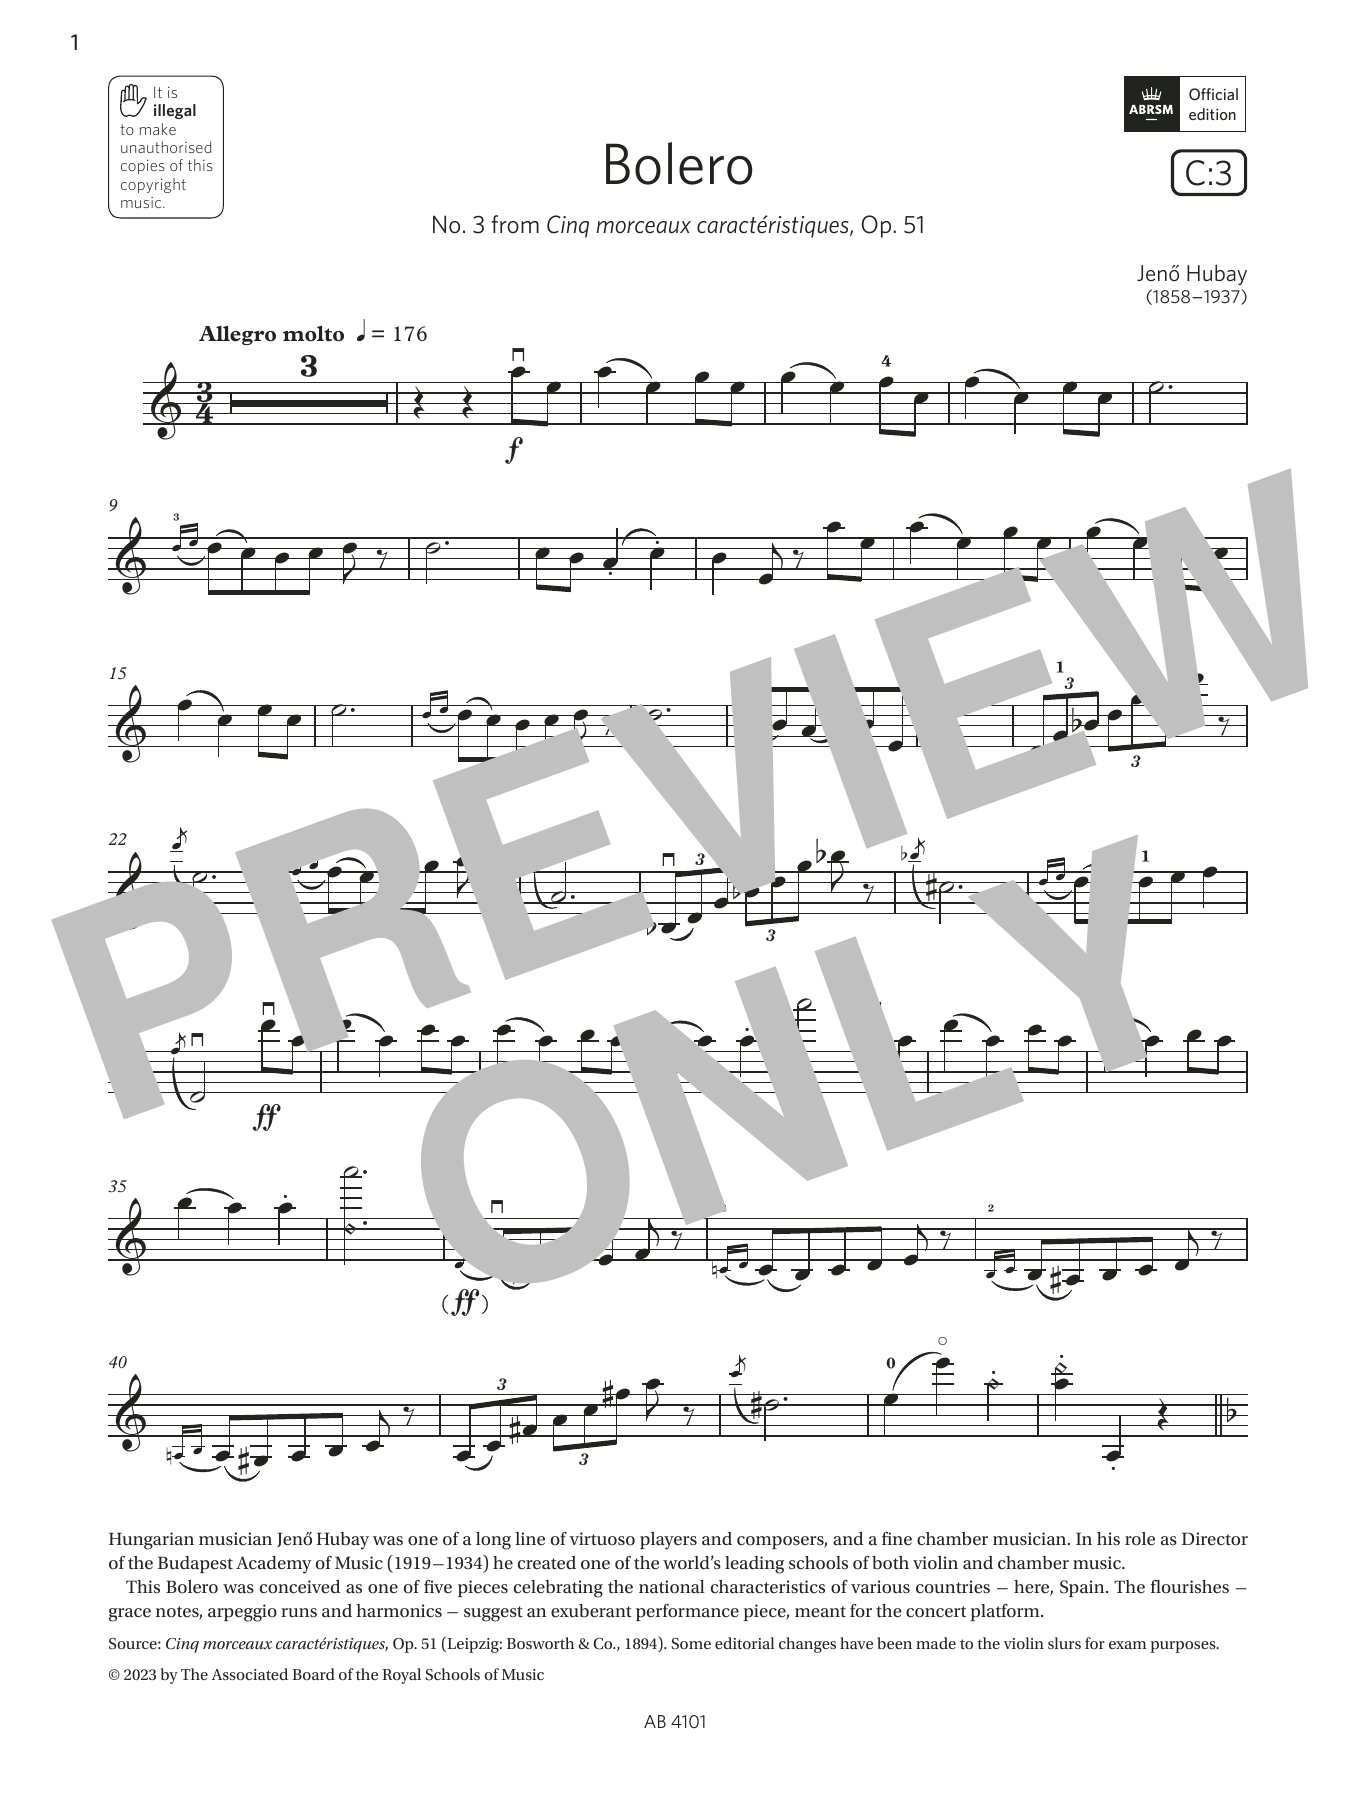 Download Jenő Hubay Bolero (Grade 7, C3, from the ABRSM Vio Sheet Music